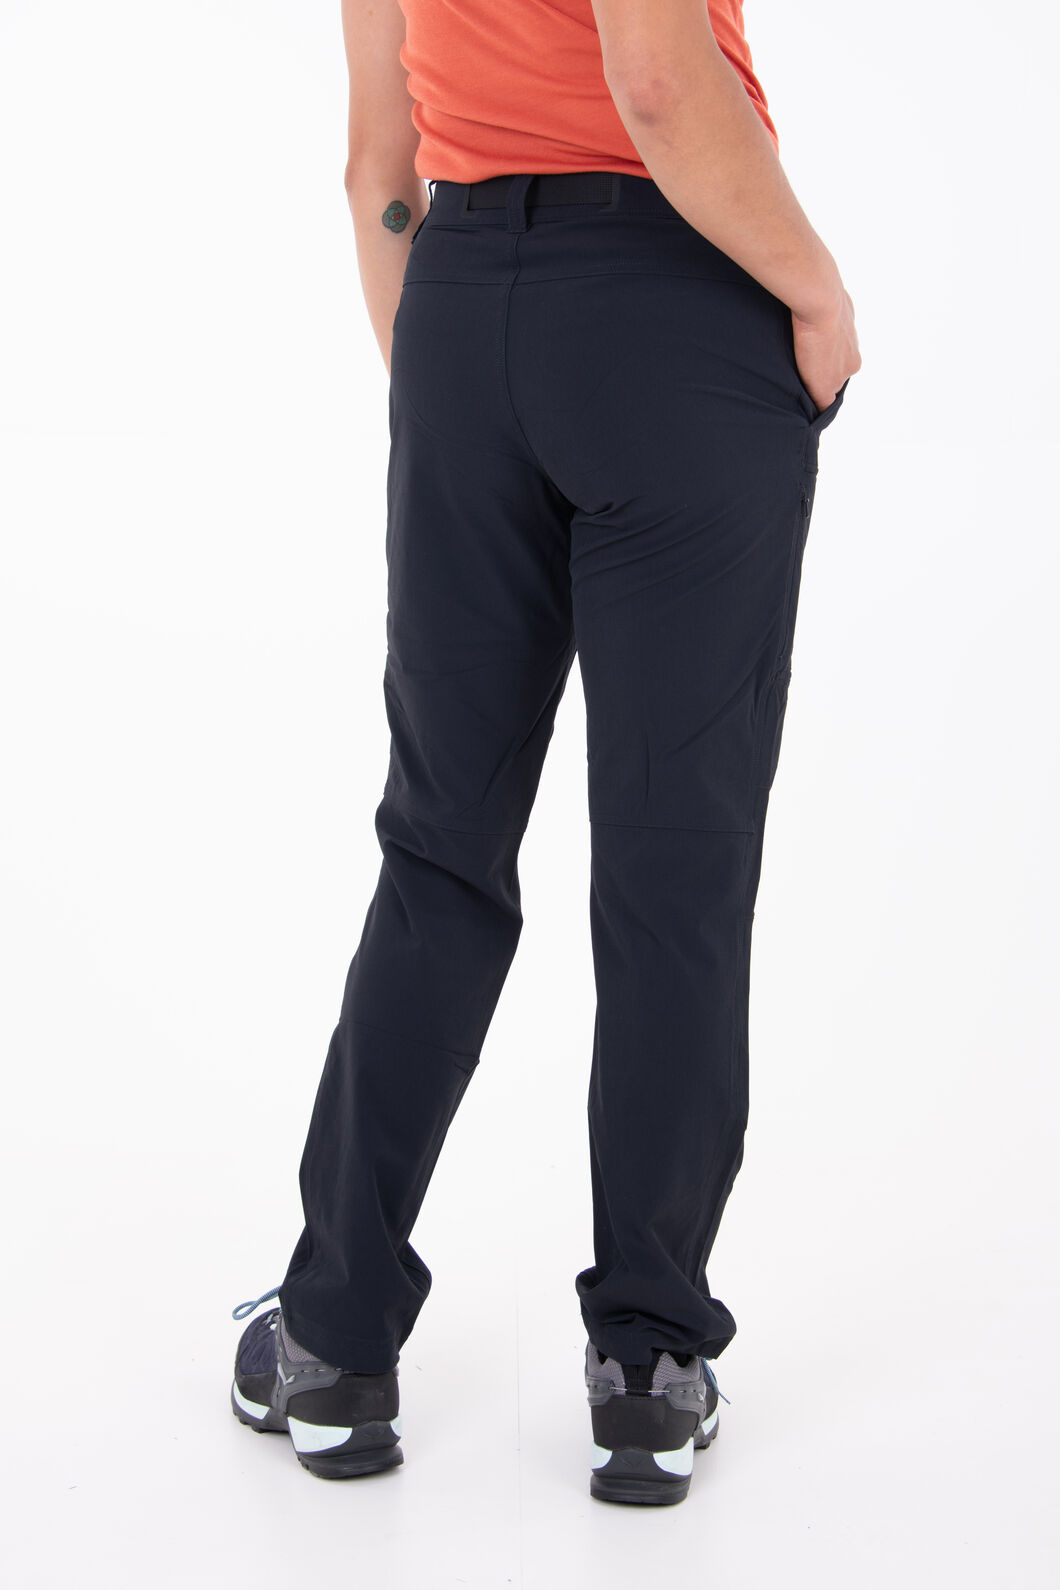 Macpac Trekker Pertex Equilibrium® Softshell Pants — Women's | Macpac